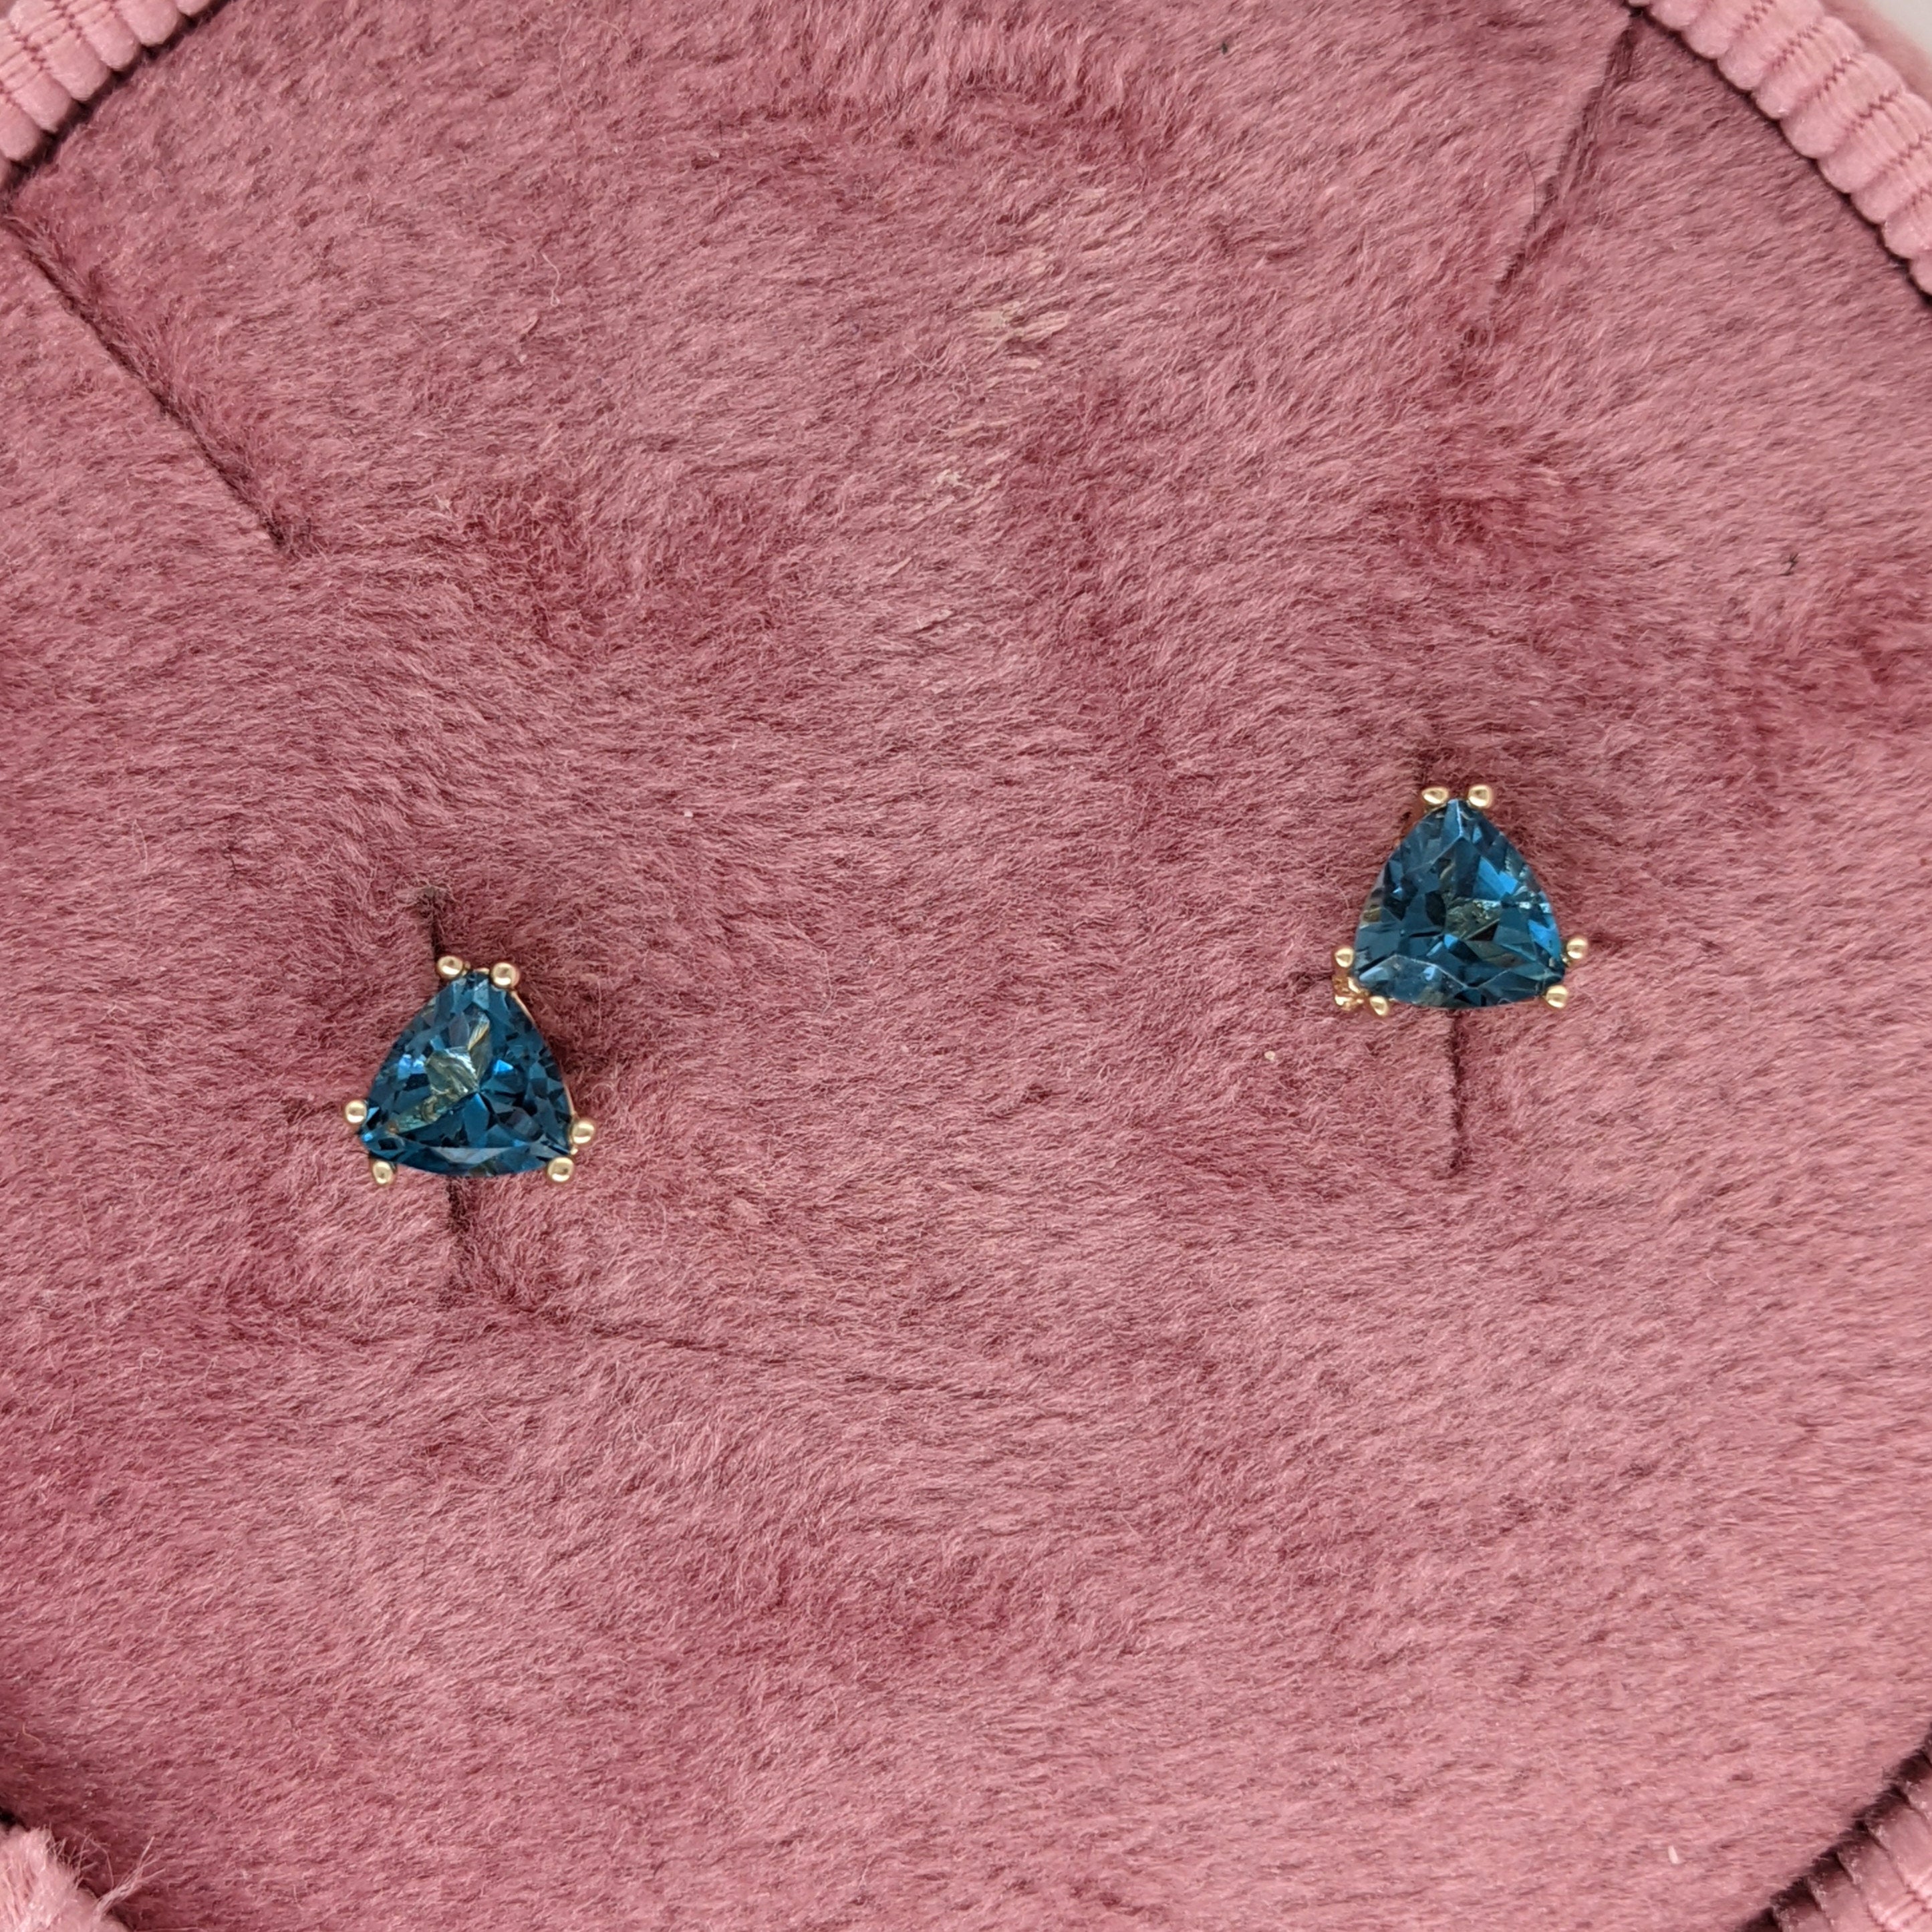 London Blue Topaz Studs in 14k Solid White, Yellow or Rose Gold | Trillion 5mm Solitaire Earrings | December Birthstone | Gemstone Earrings